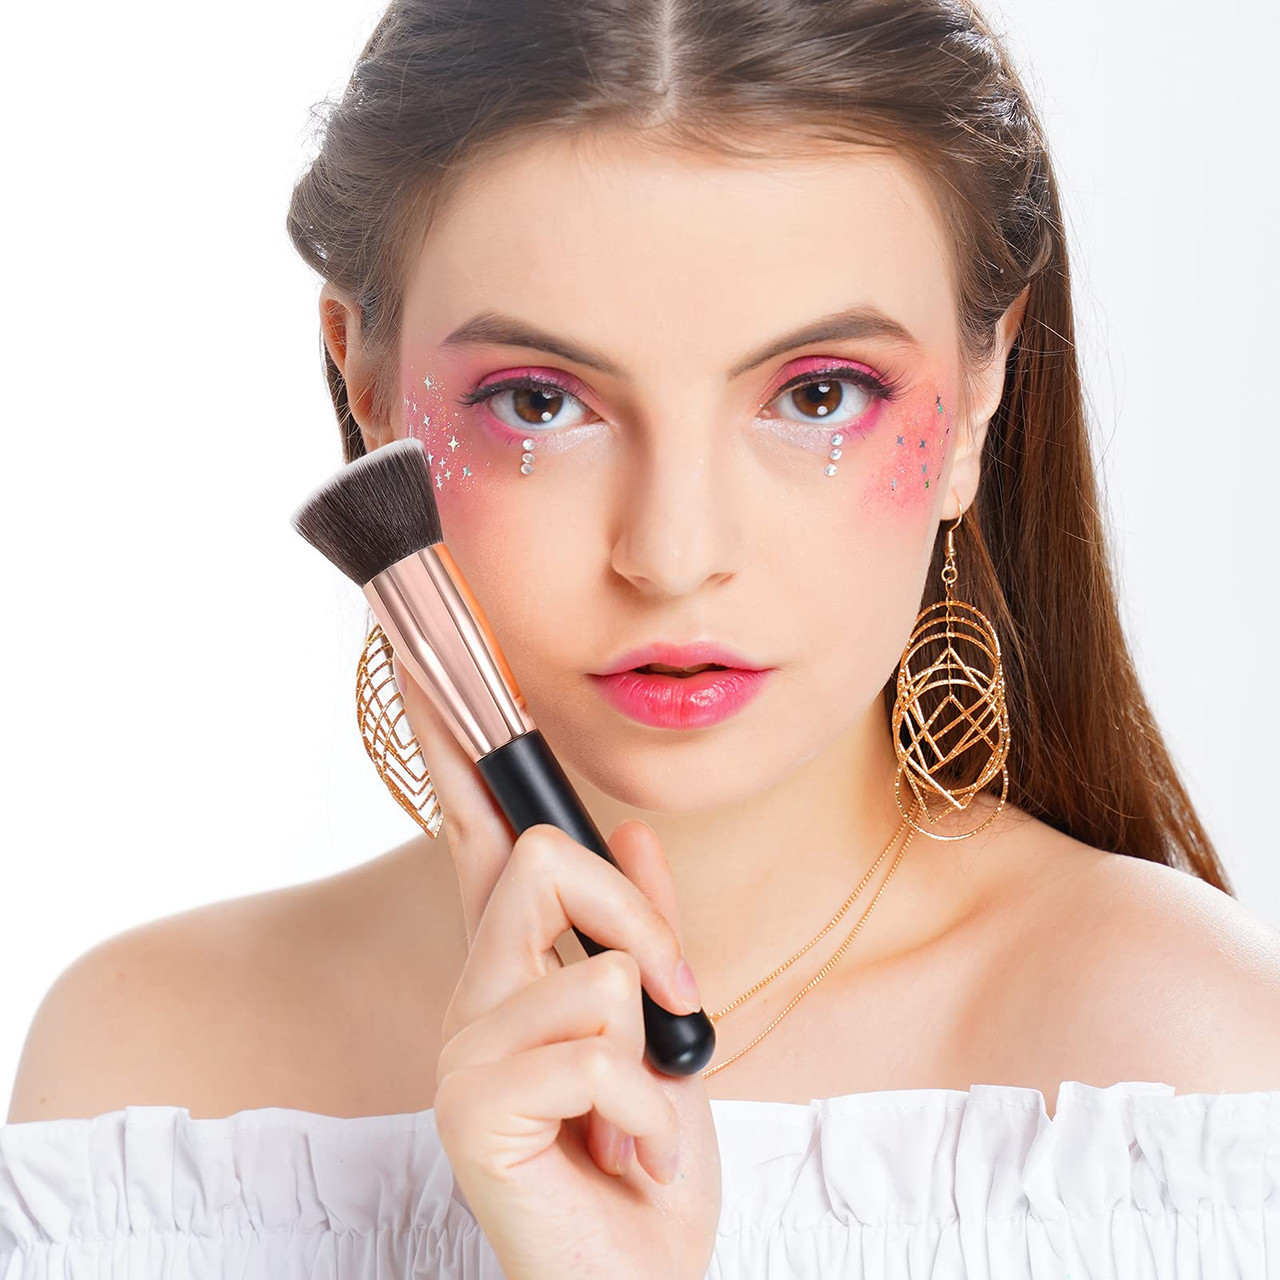  Alibeauty Makeup Brushes Set Premium Synthetic Foundation  Powder Concealers Eye Shadows Makeup 10 Pcs Brush Set : Beauty & Personal  Care